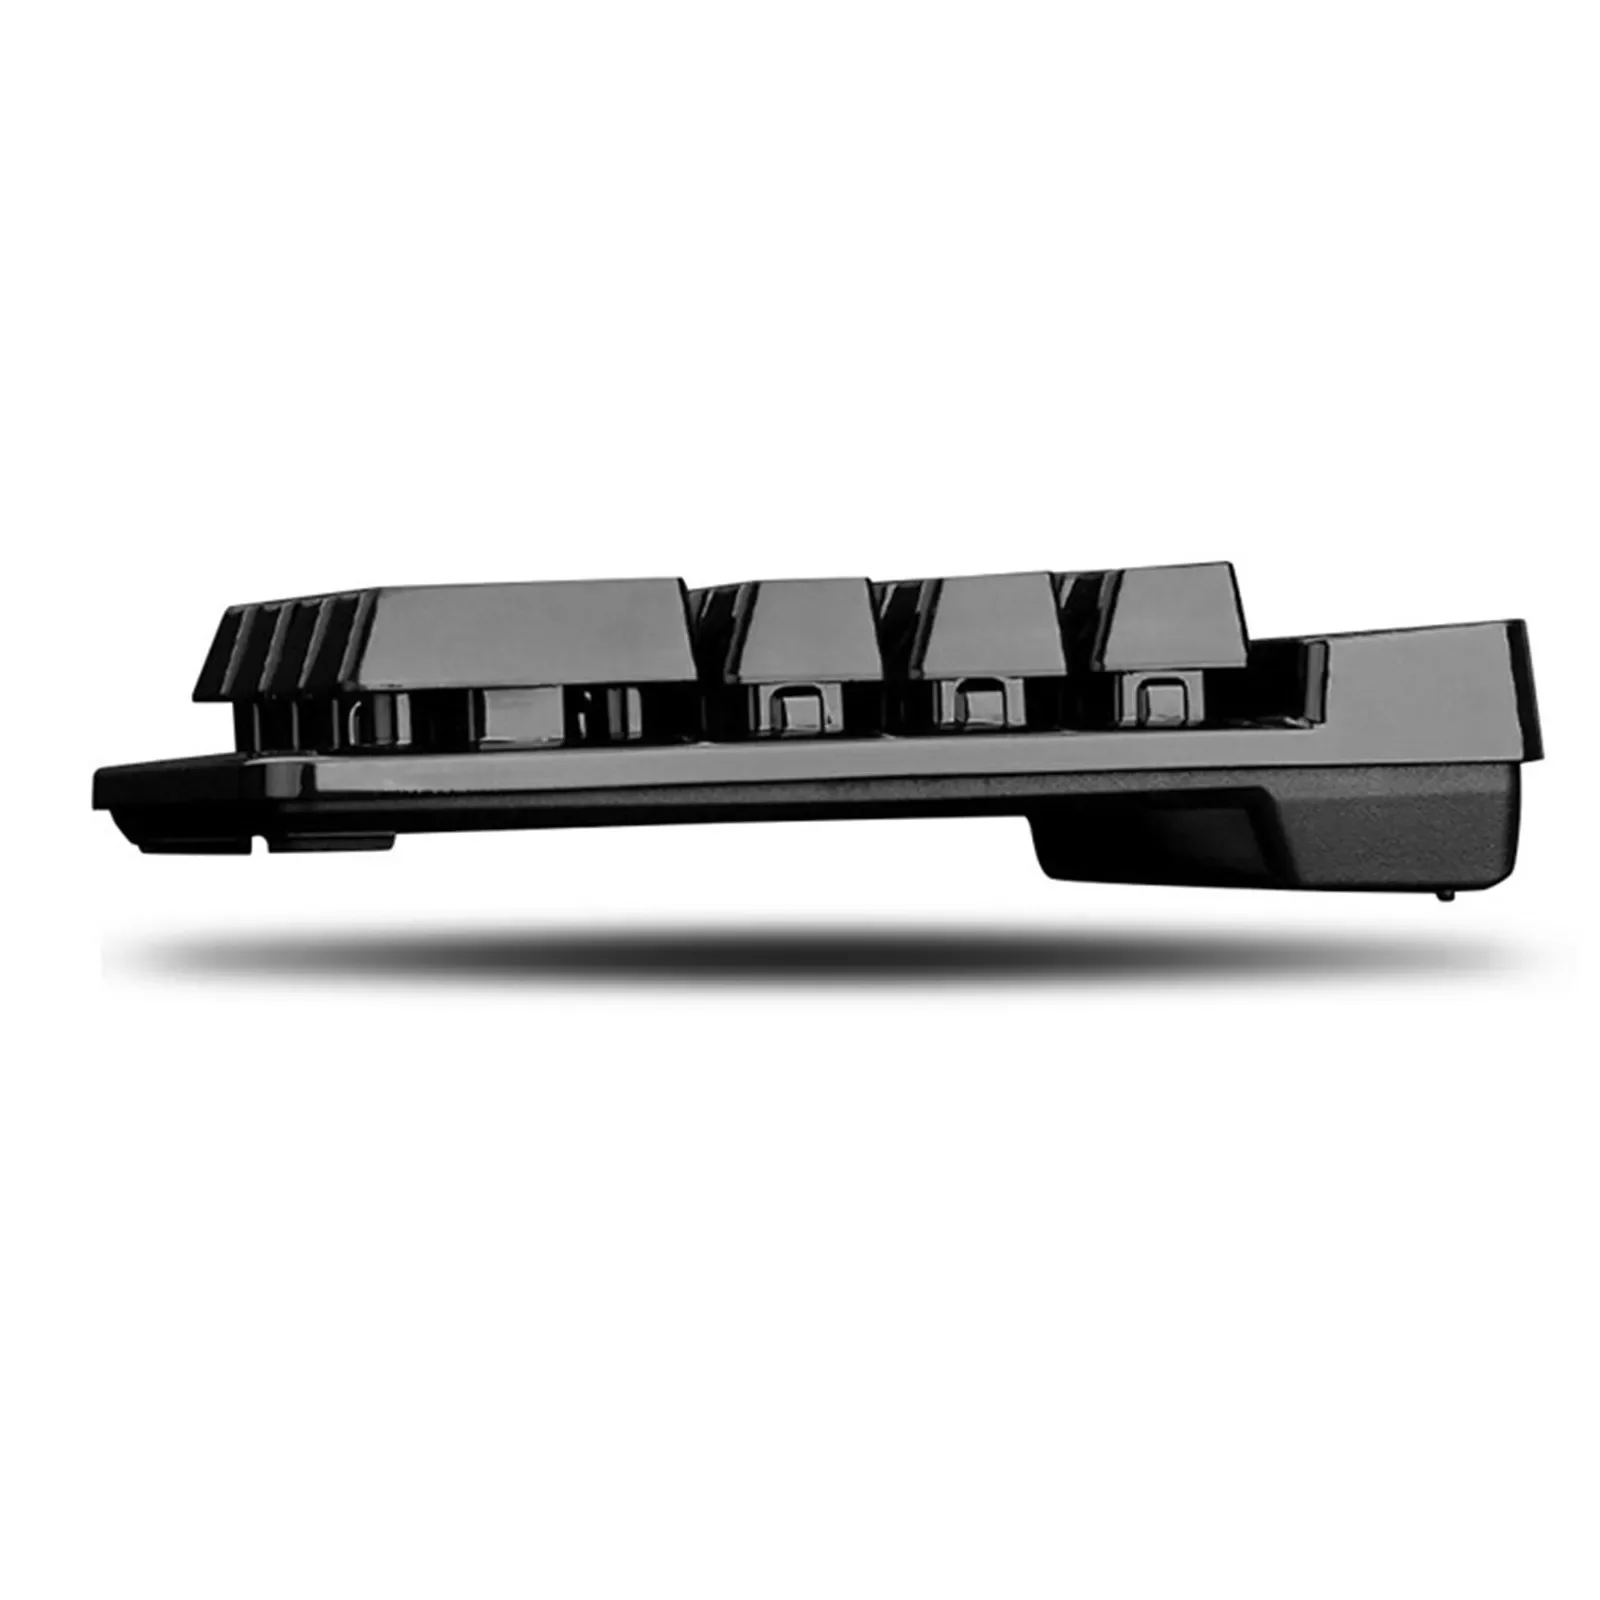 Full Size Wireless Keyboard Pad Keyboard Keys Number Portable 4.0 Keypad Num 19 Numeric Digital Bluetooth Keyboard Bee Keyboard enlarge